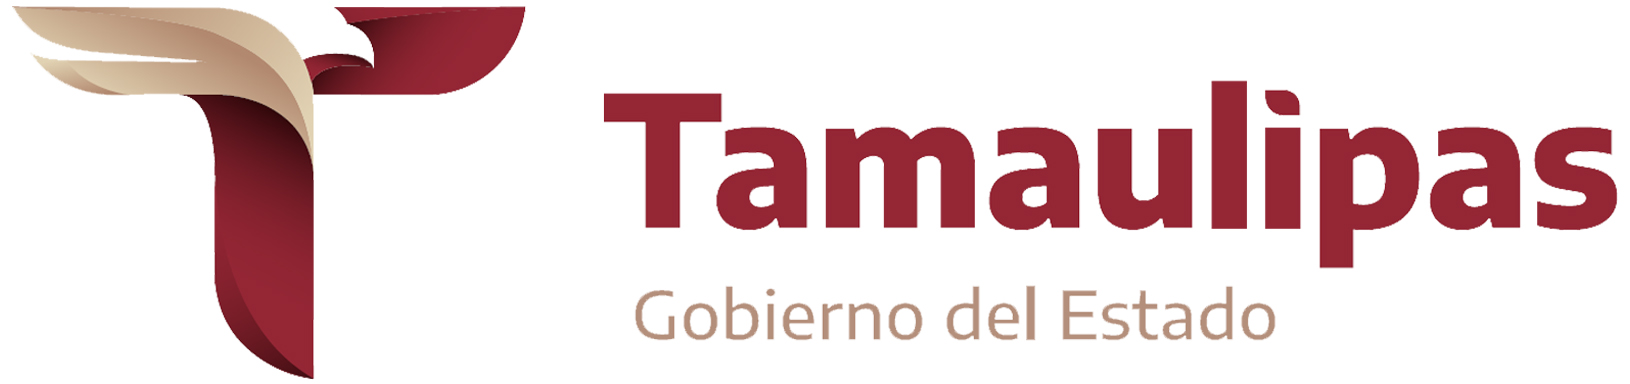 Tamaulipas - Gobierno de Estado